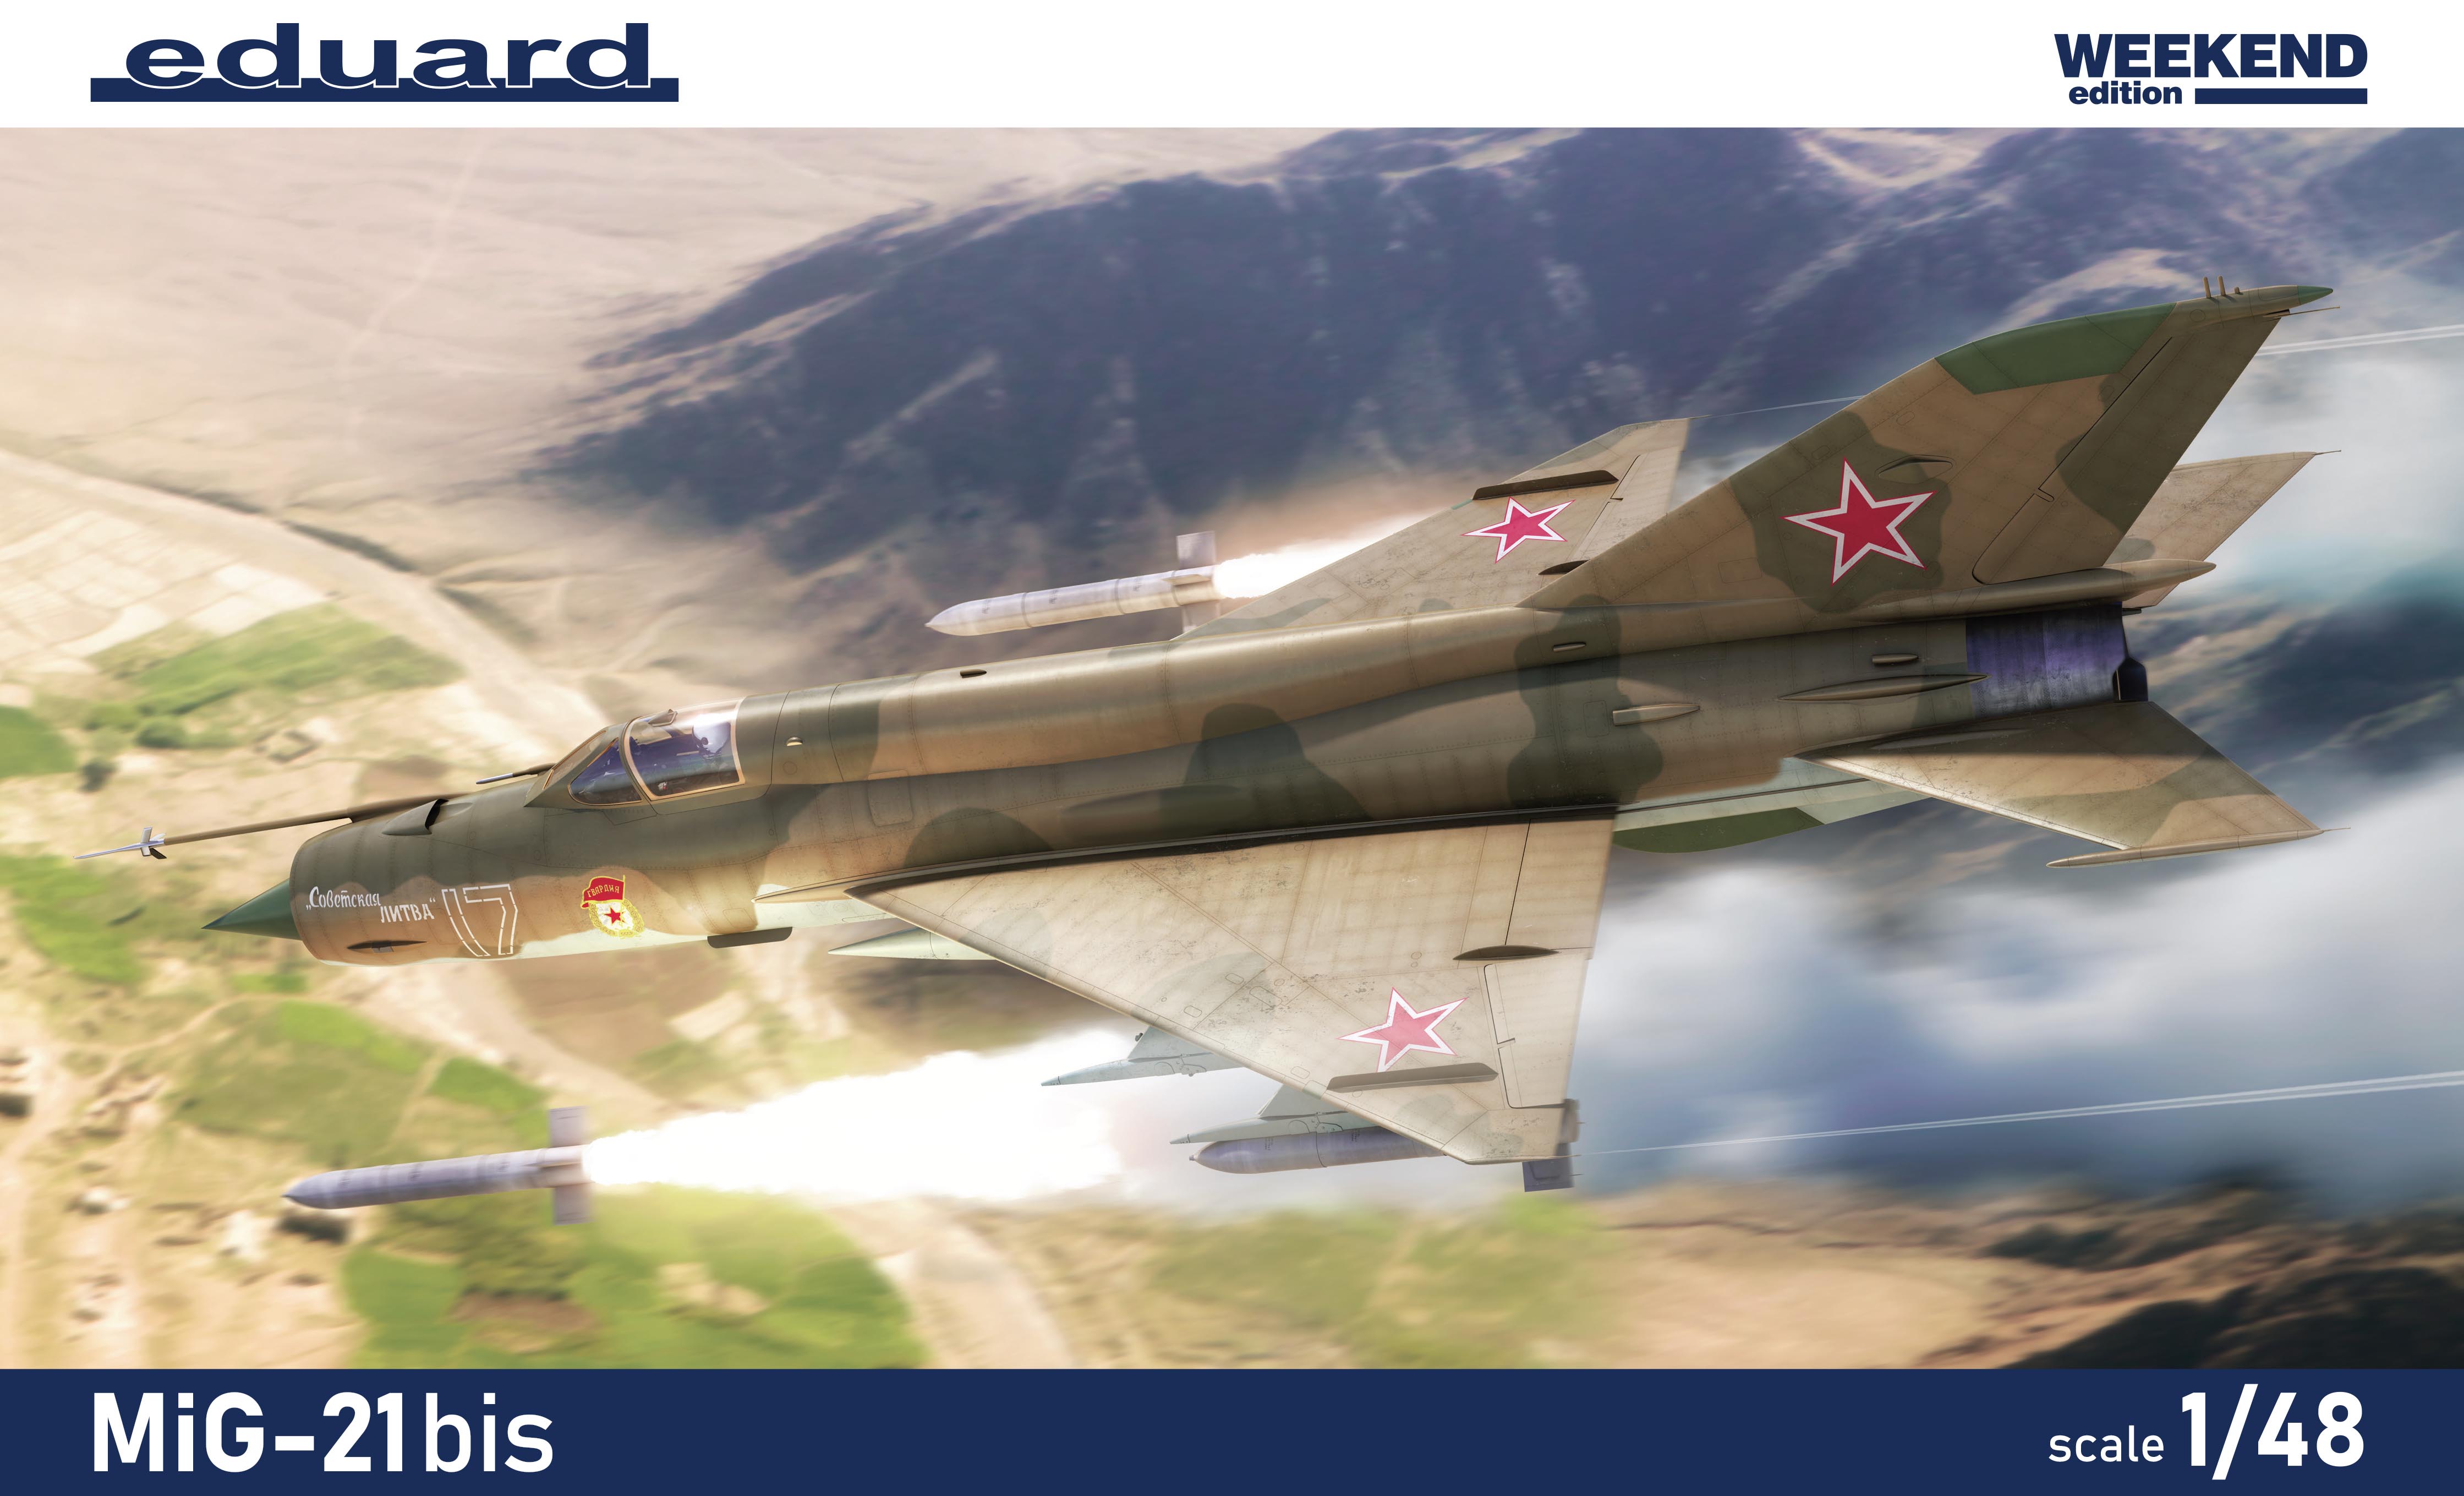 Model kit 1/48 Mikoyan MiG-21bis Weekend edition (Eduard kits)